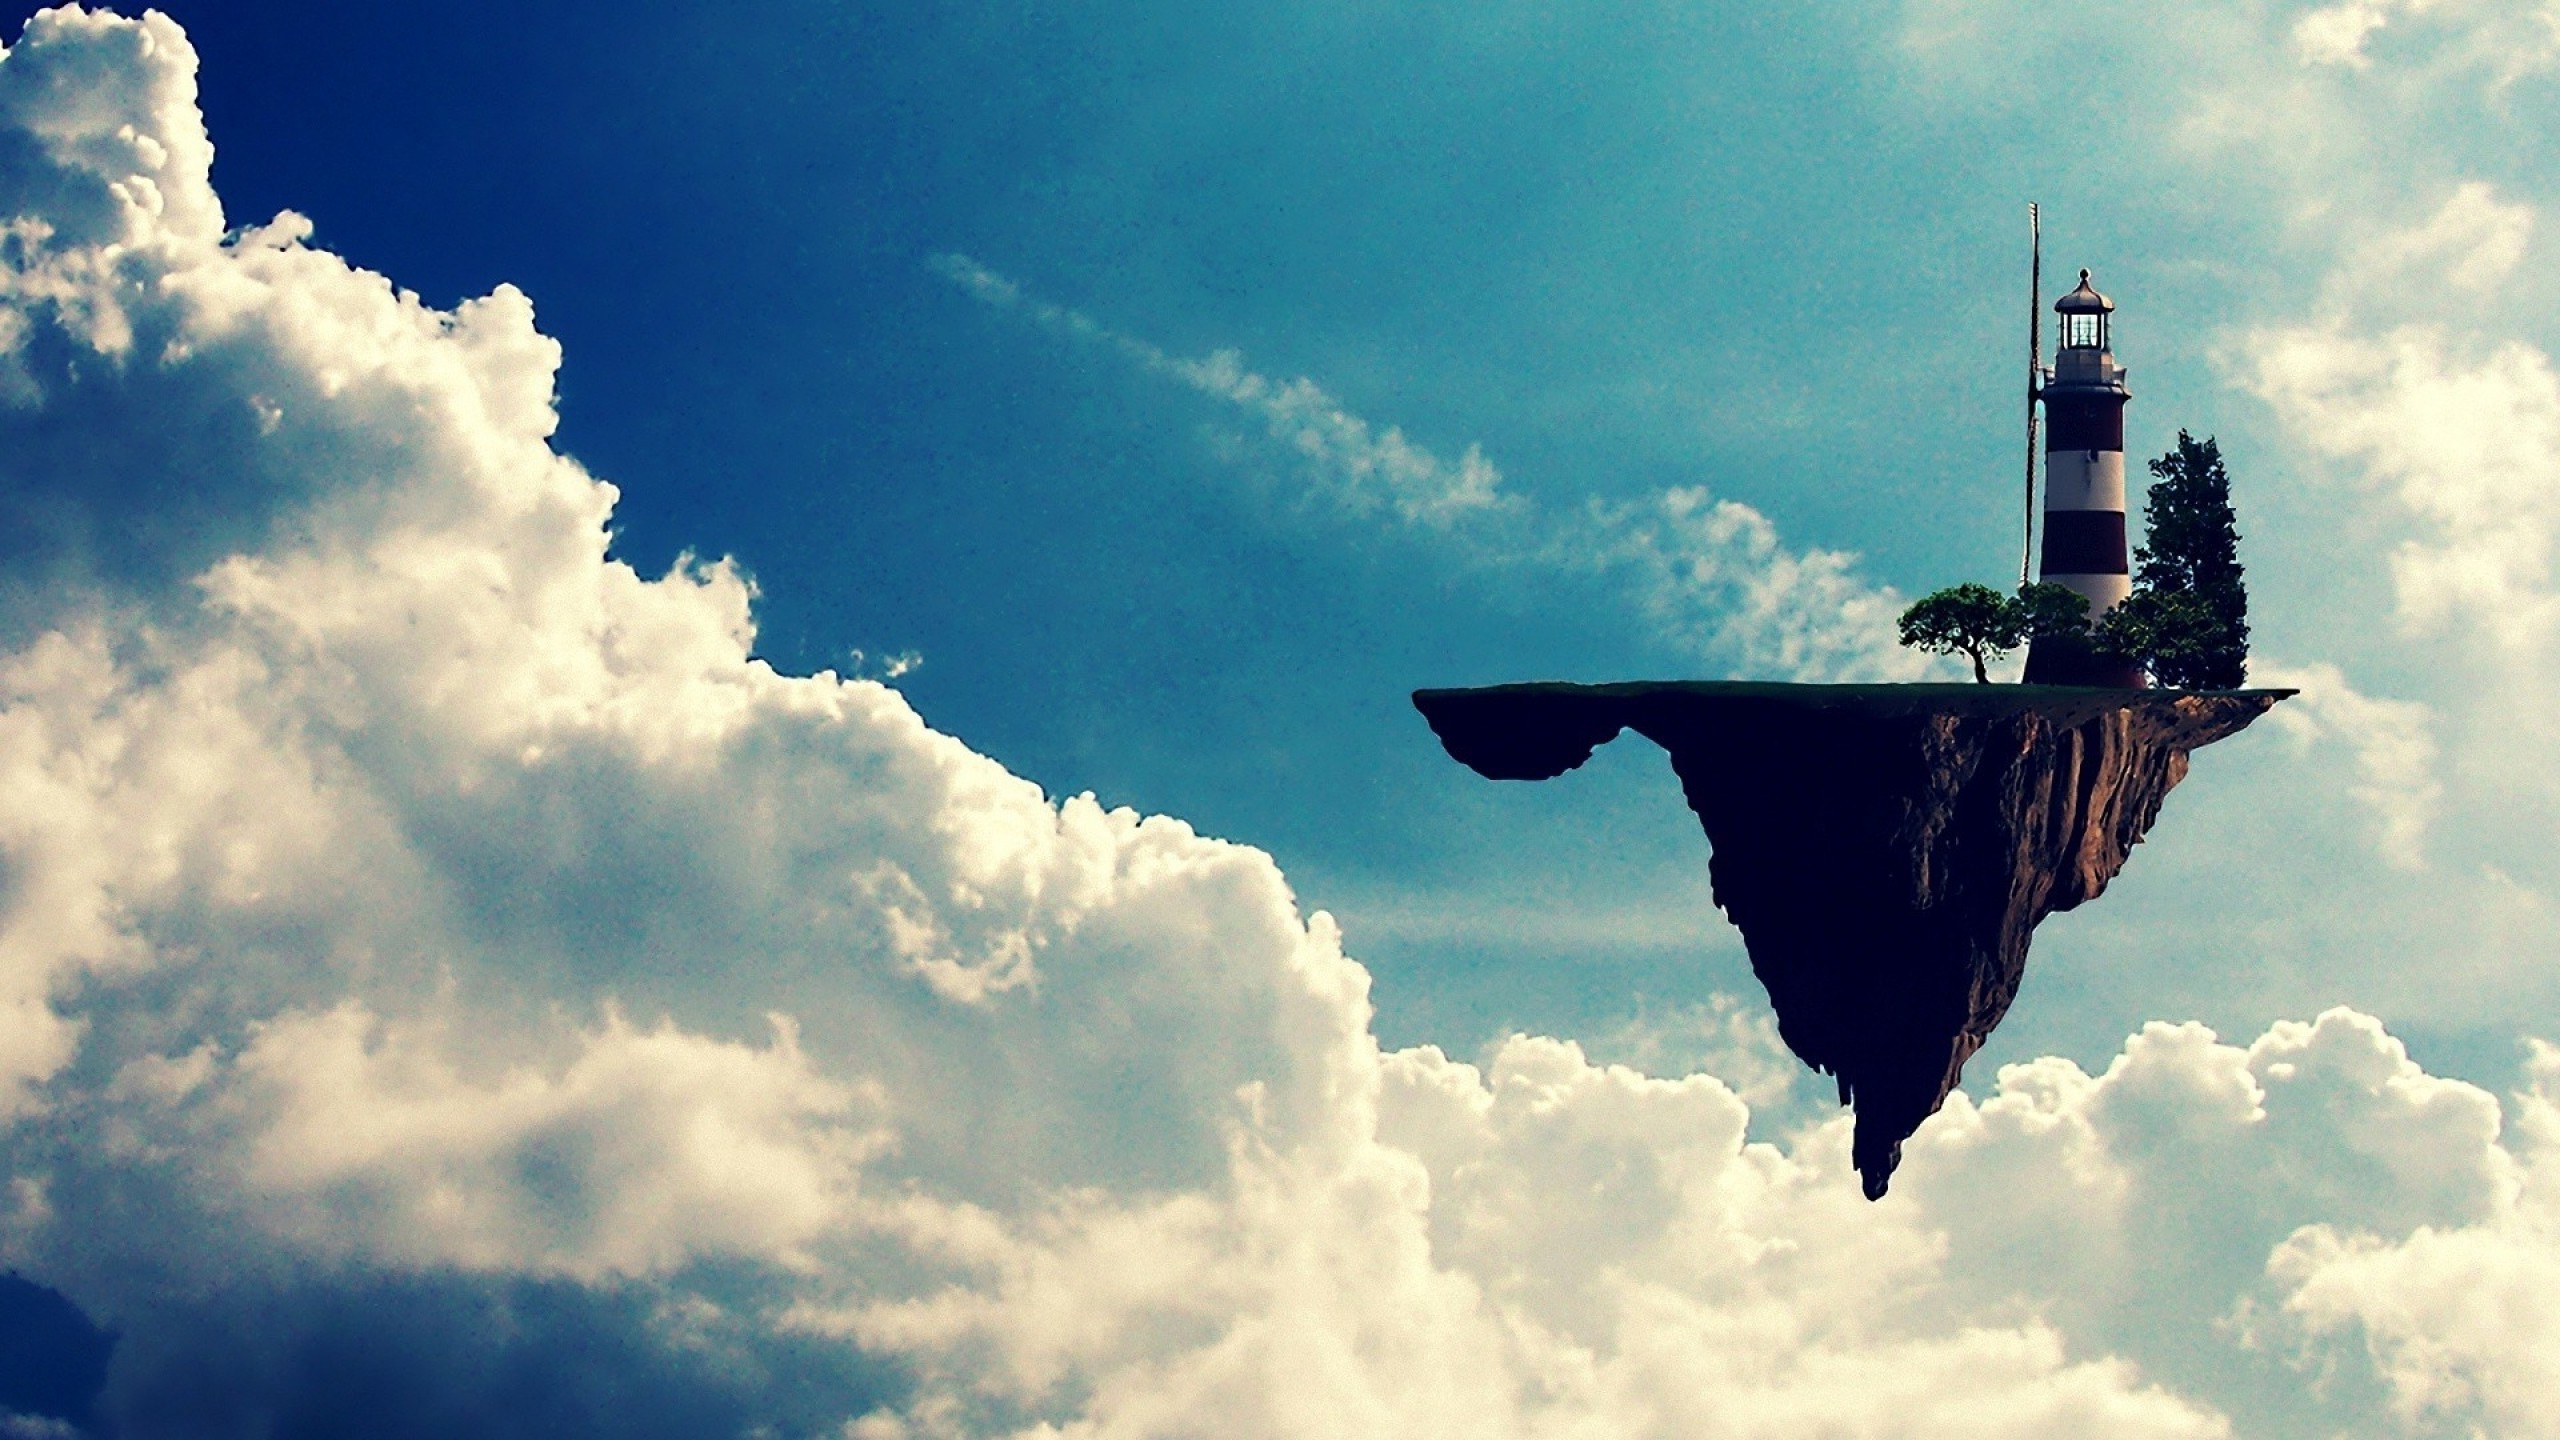 Gorillaz, Floating island, Jamie Hewlett, Sky Wallpaper